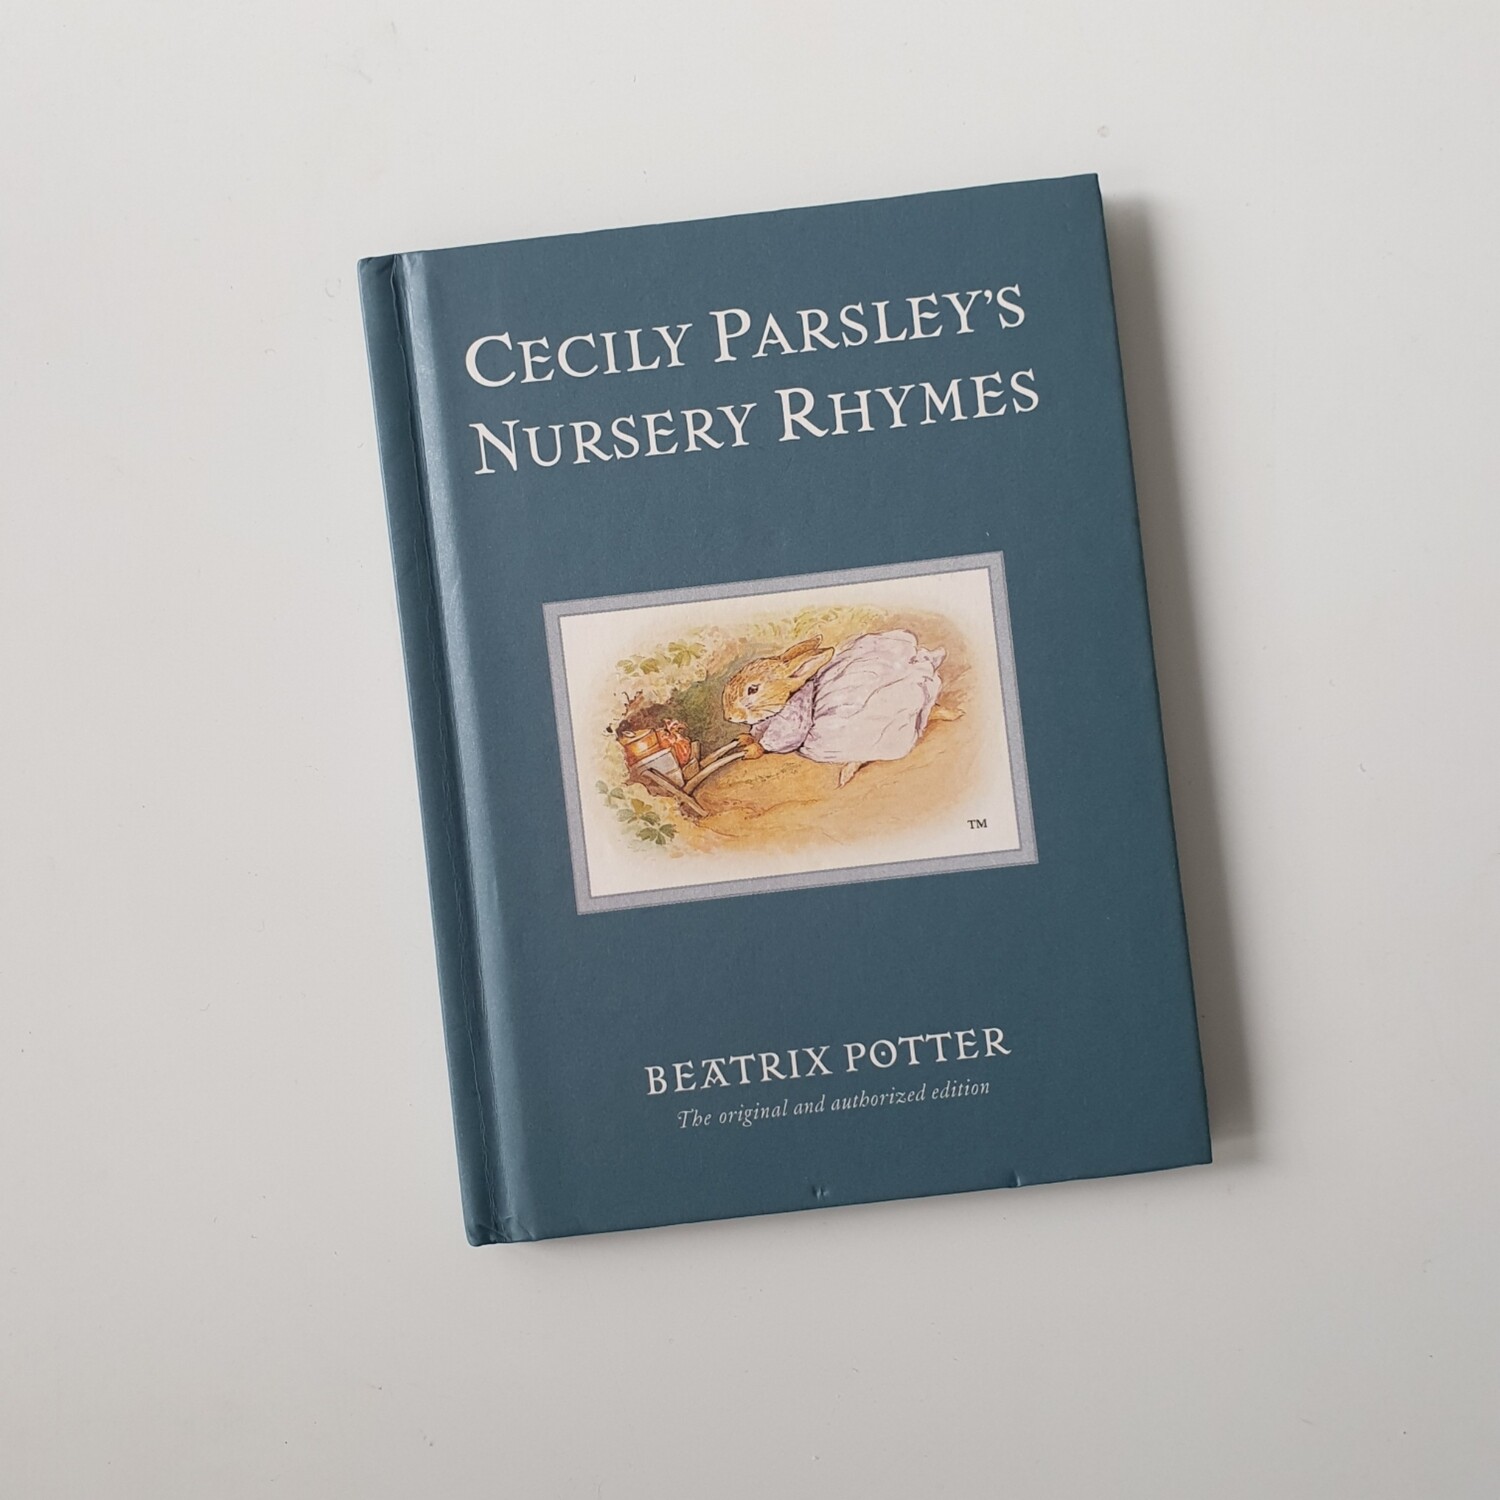 Cecily Parsley's Nursery Book Notebook - Beatrix Potter